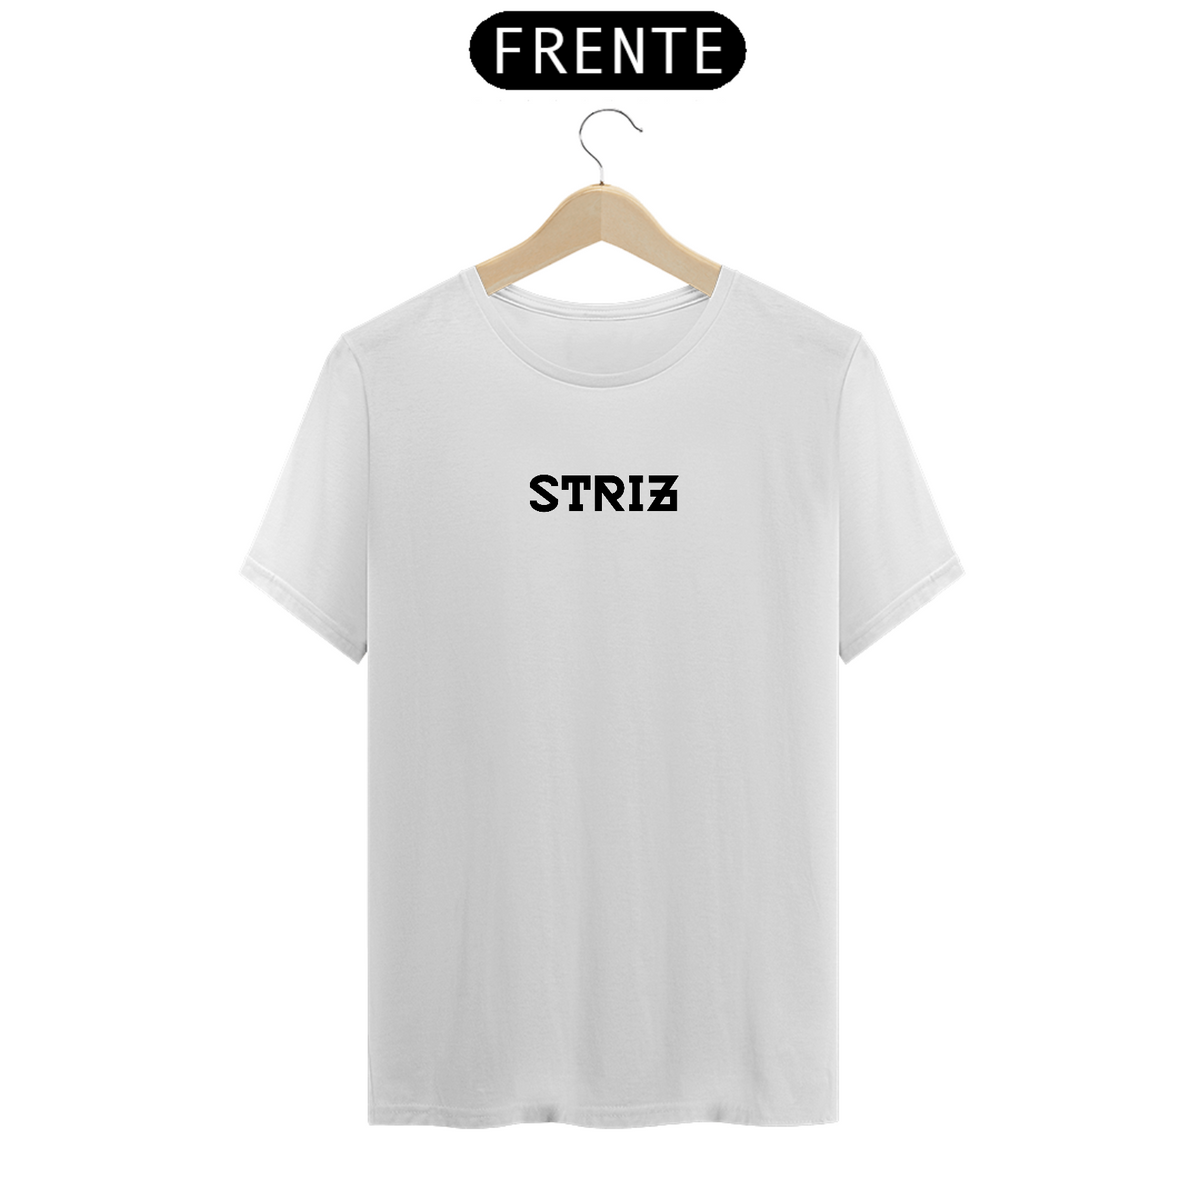 Nome do produto: Camiseta Striz Branca